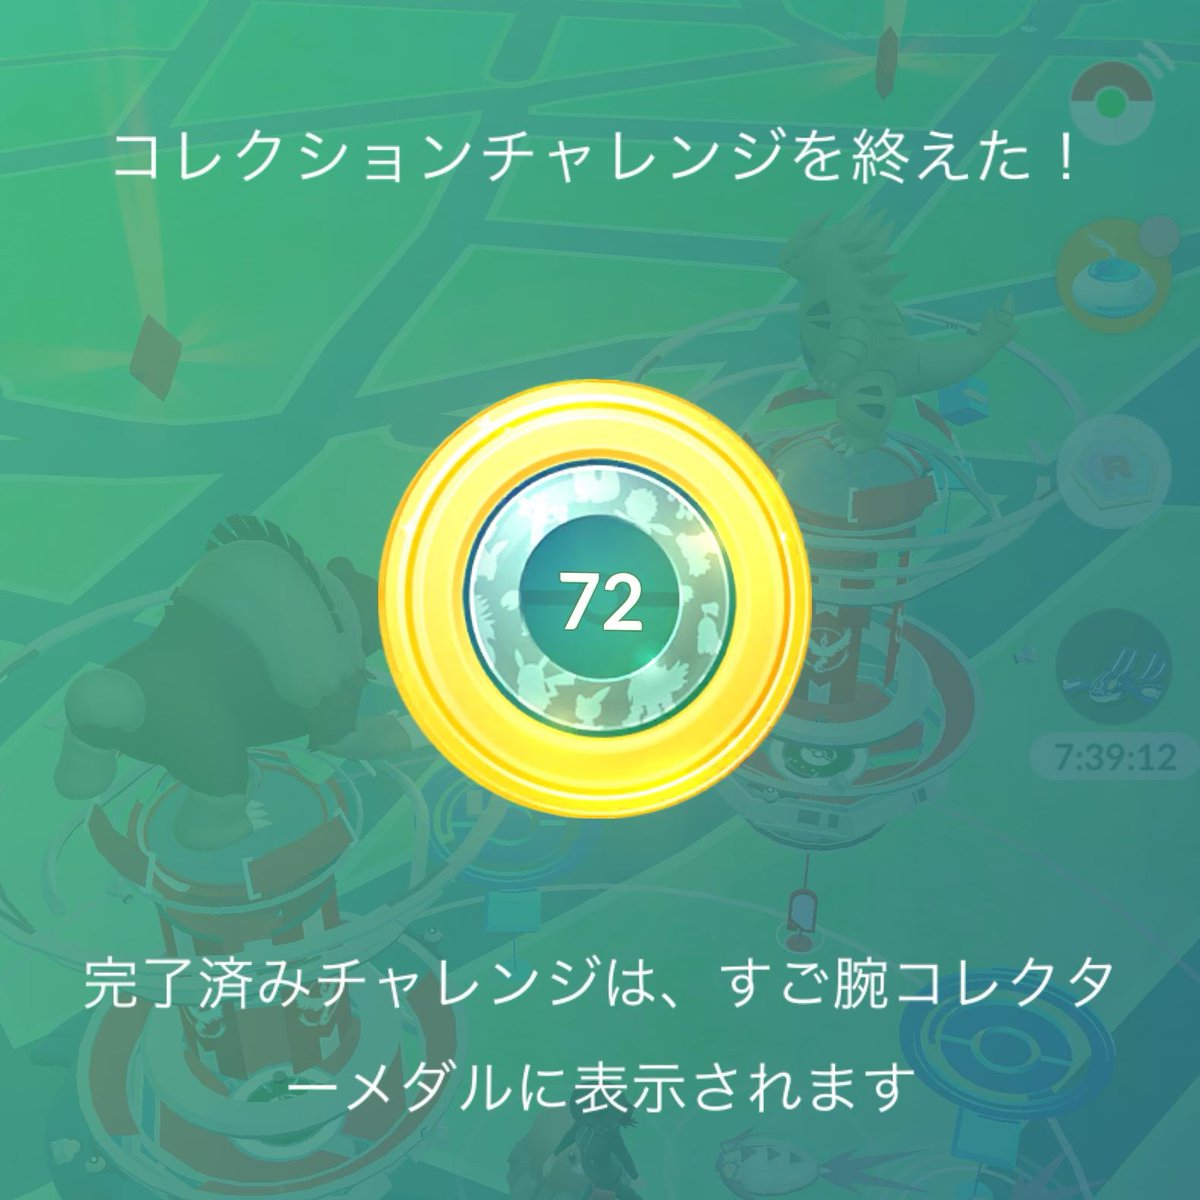 Pokémon GO の楽しさを体験しよう！pokemongolive.com/refer?code=PBJ…